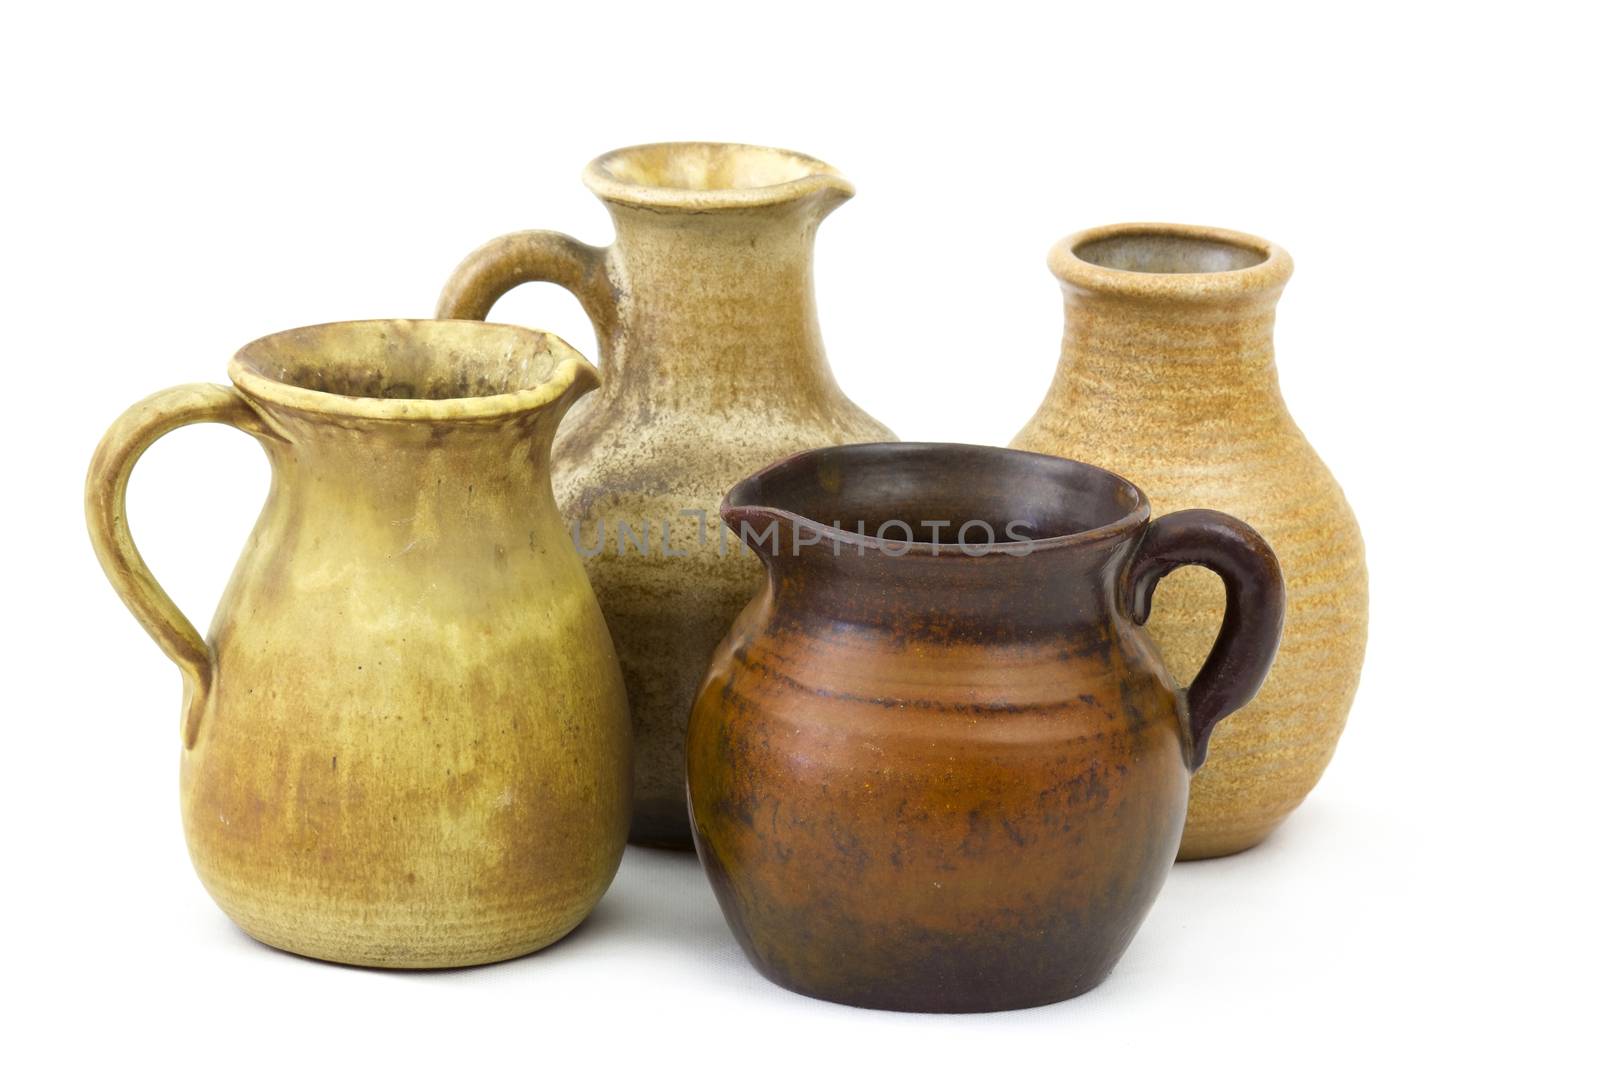 Clay pots, old ceramic vases by miradrozdowski